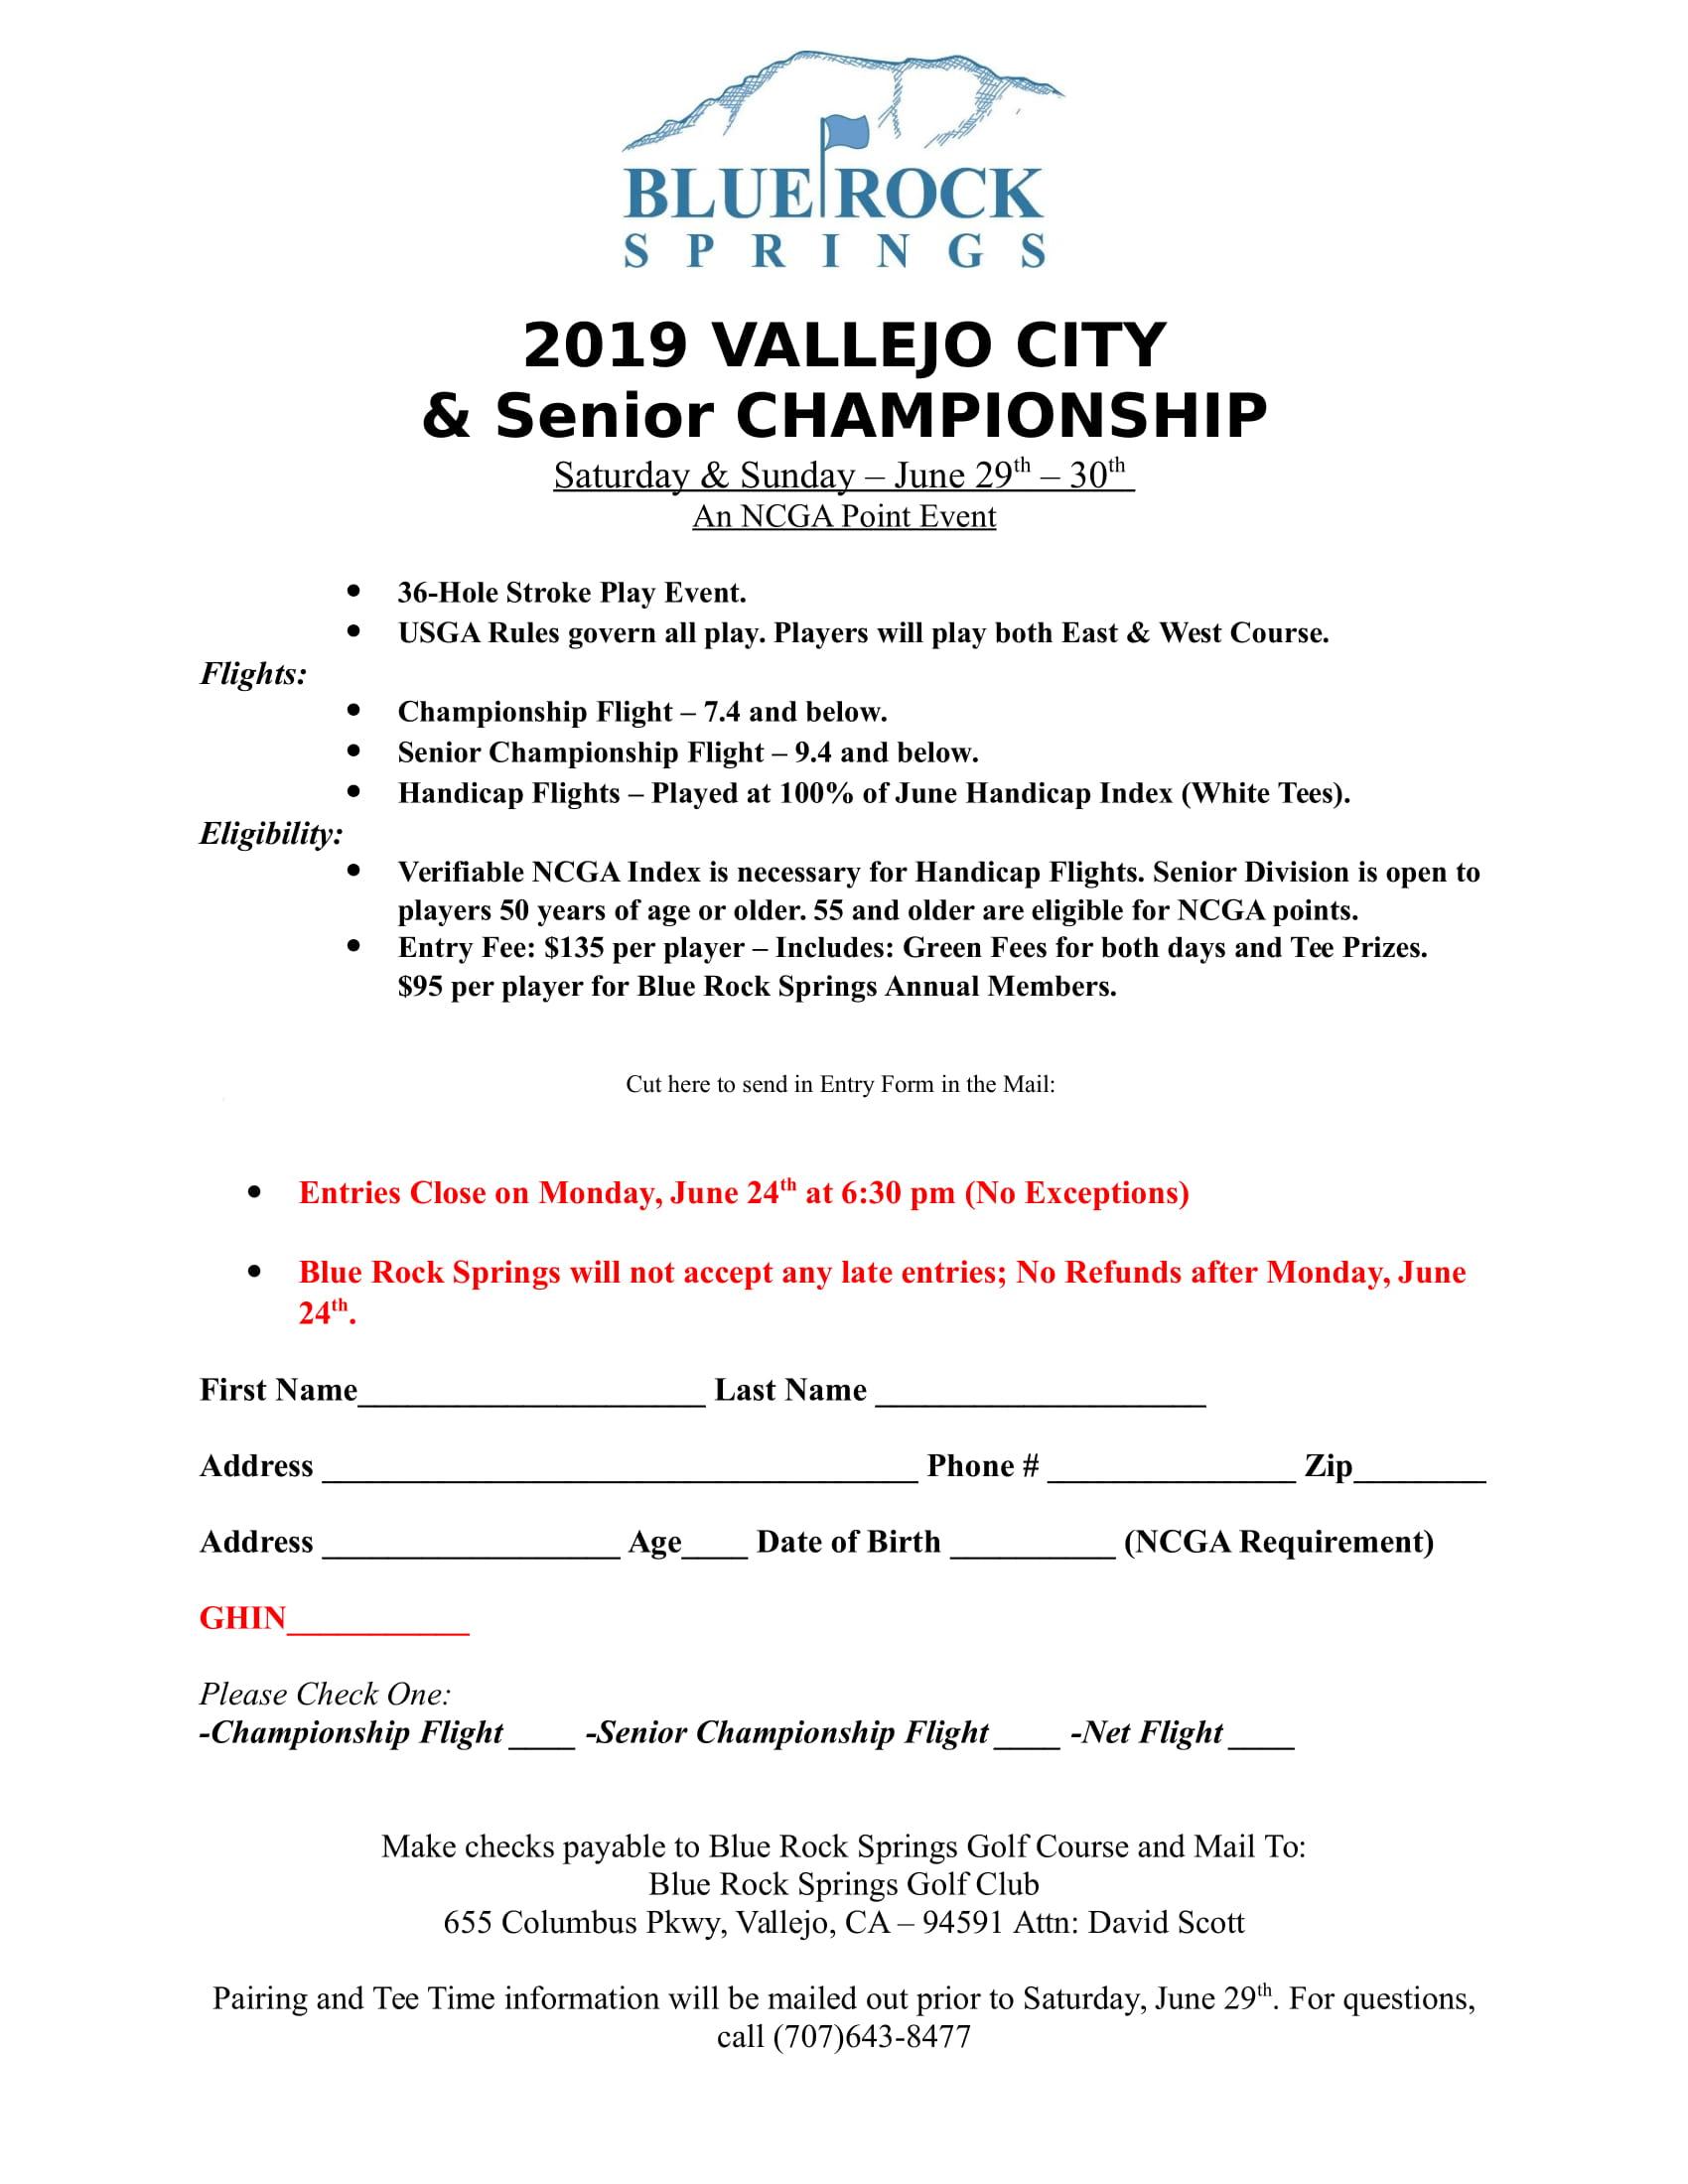 2019 Vallejo City and Senior Golf Championships